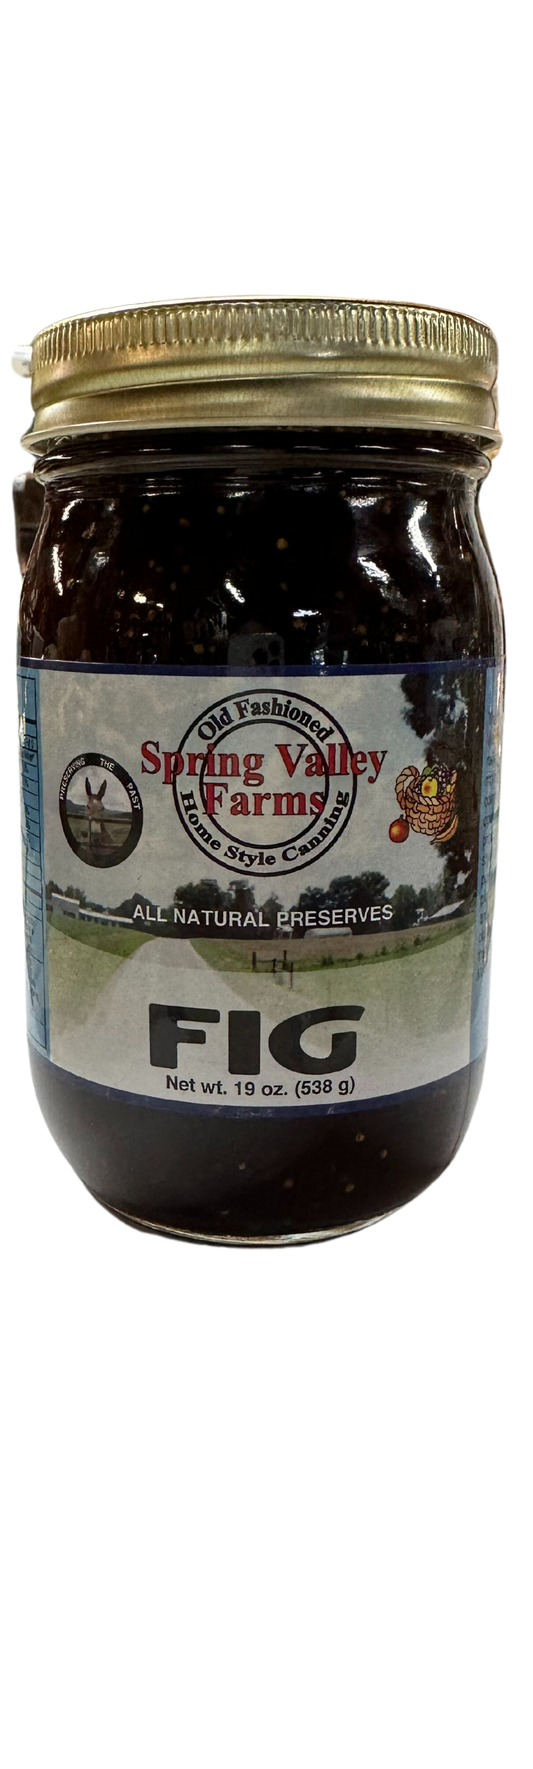 Spring Valley Farms FIG Jam